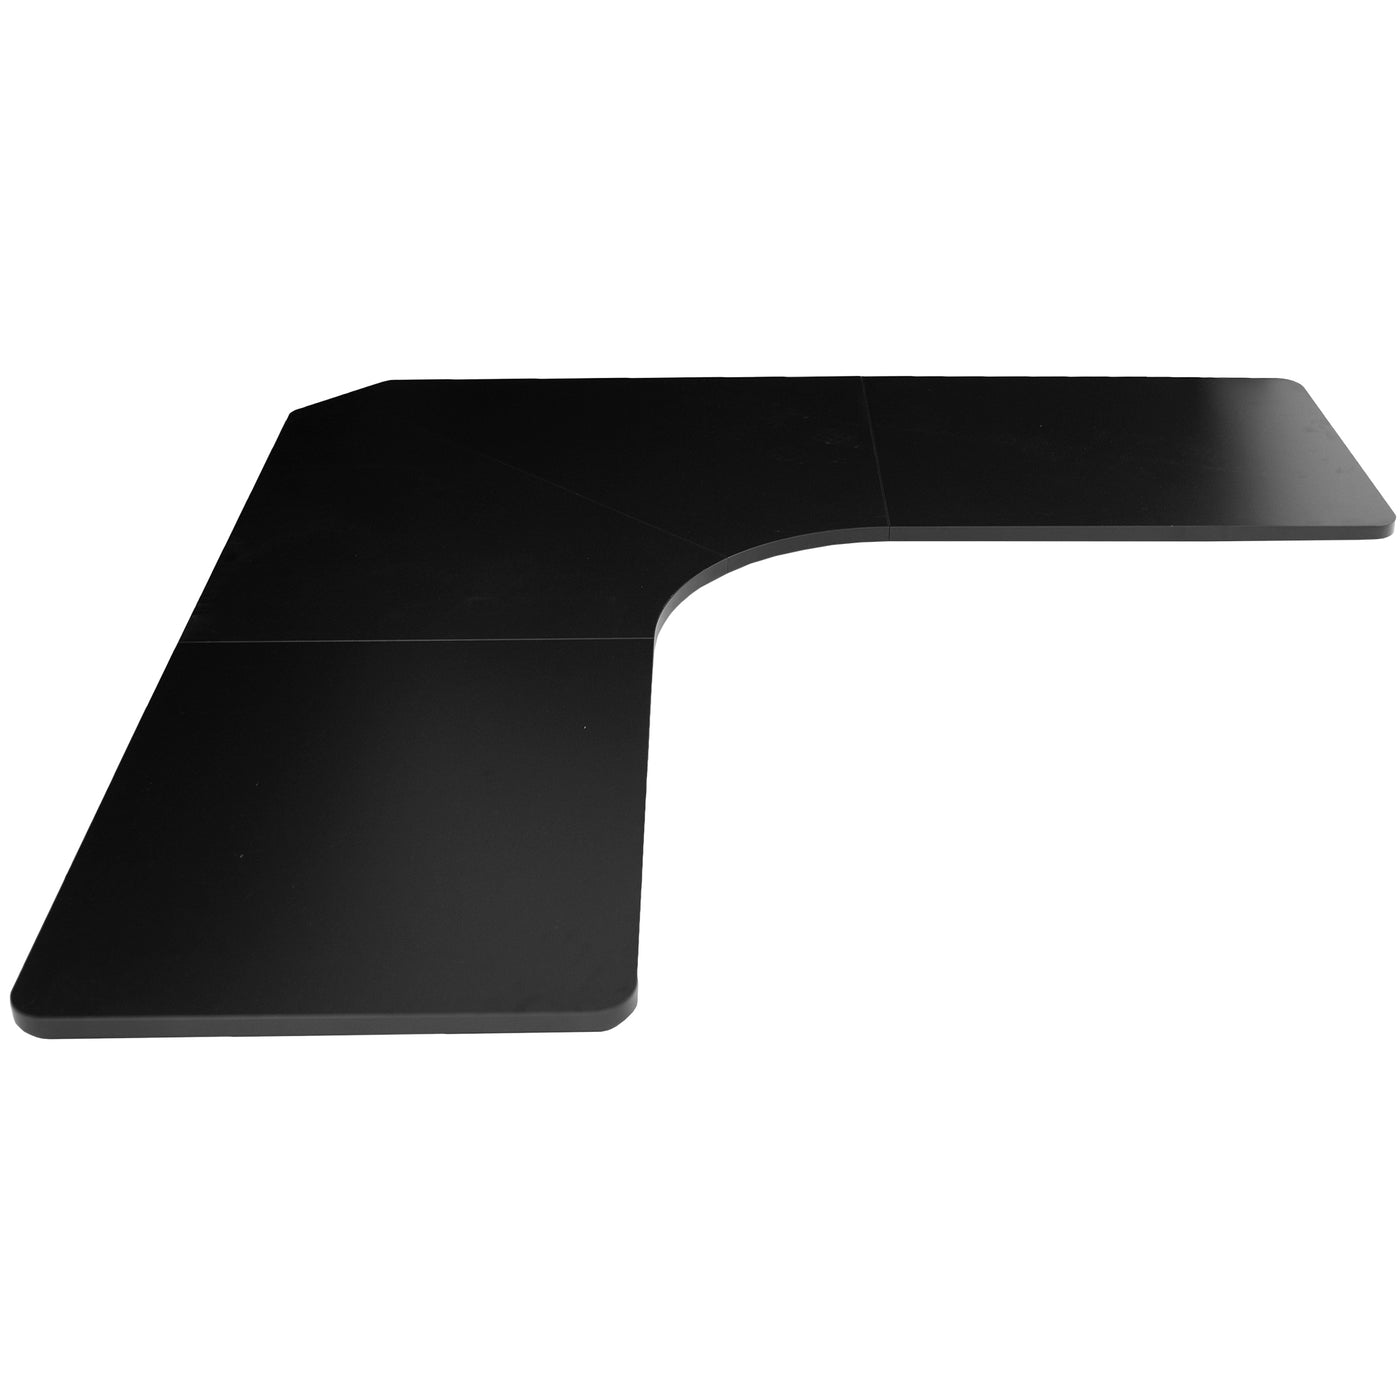 L-shaped curved corner tabletop.